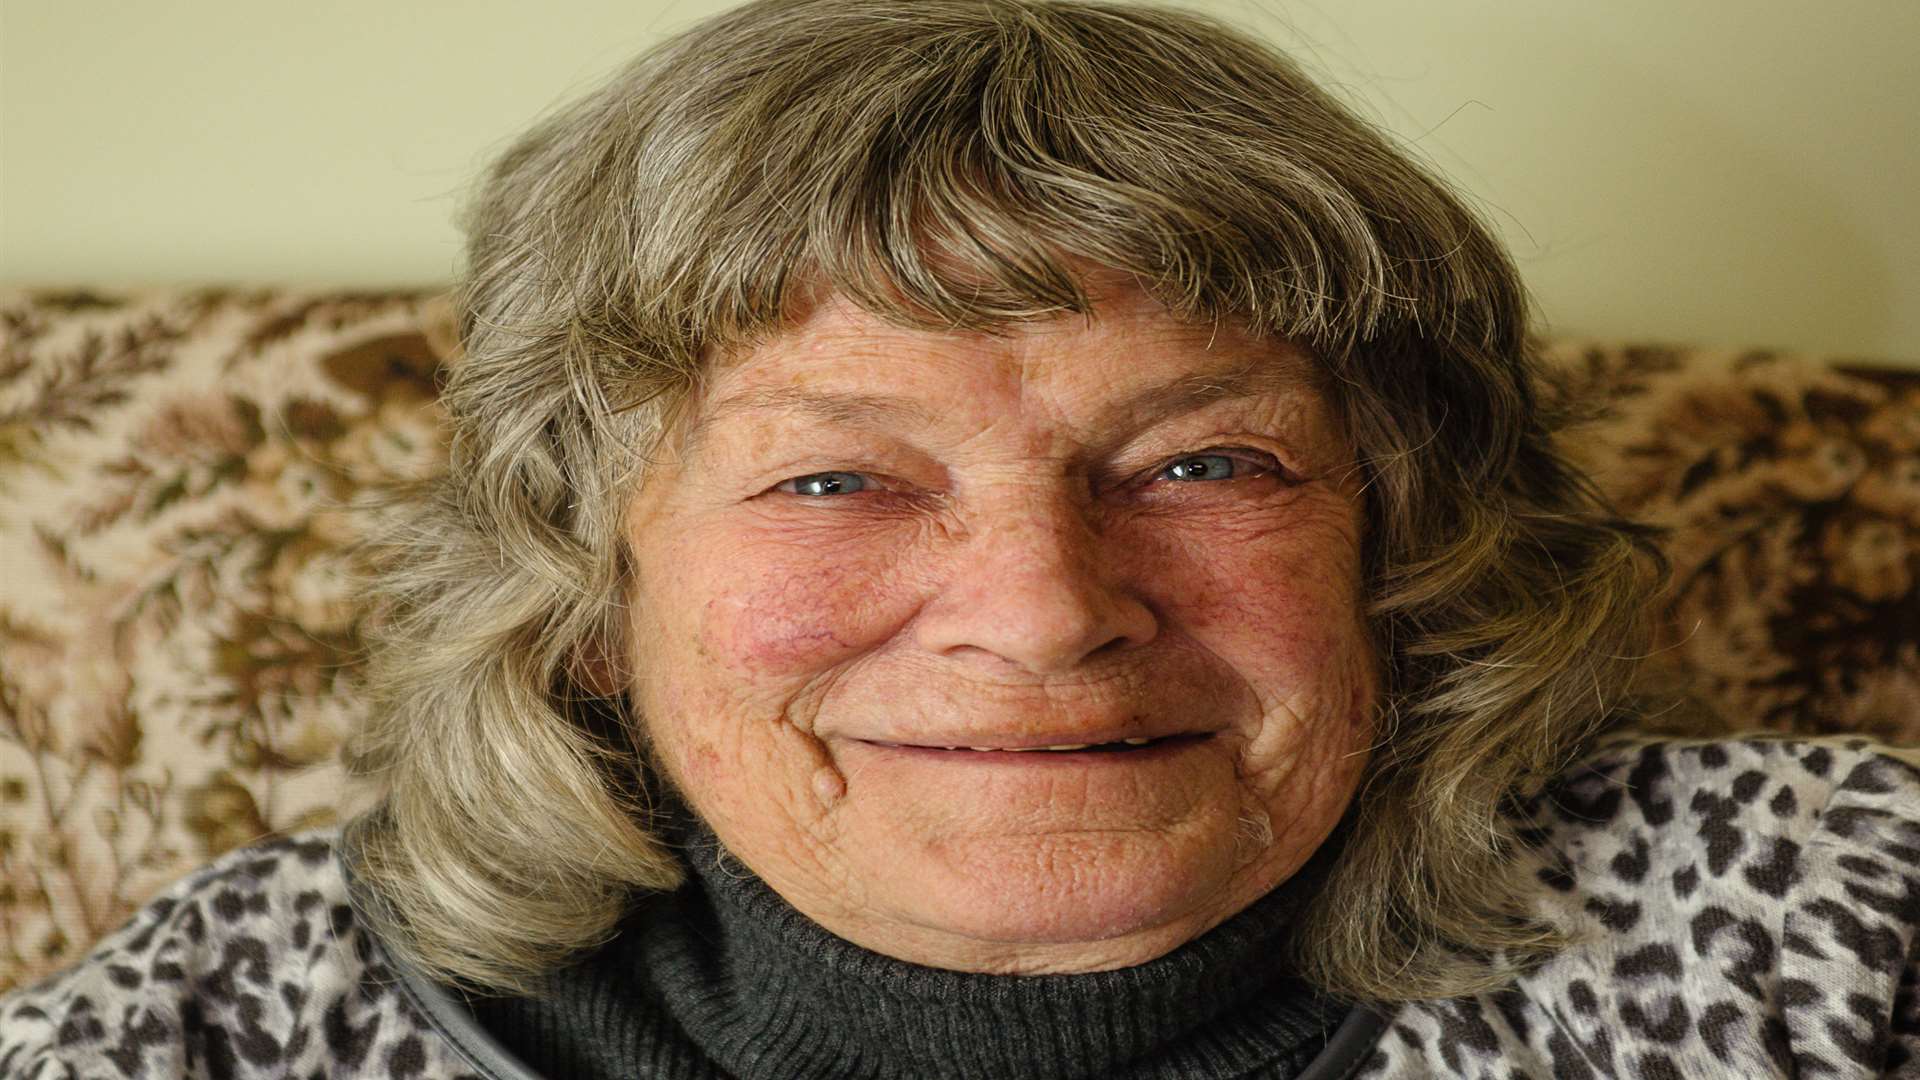 Barbara Troke, 76, of Bridgeside Deal met a Good Samaritan at Tesco Whitfield when she realised she did not have her debit card